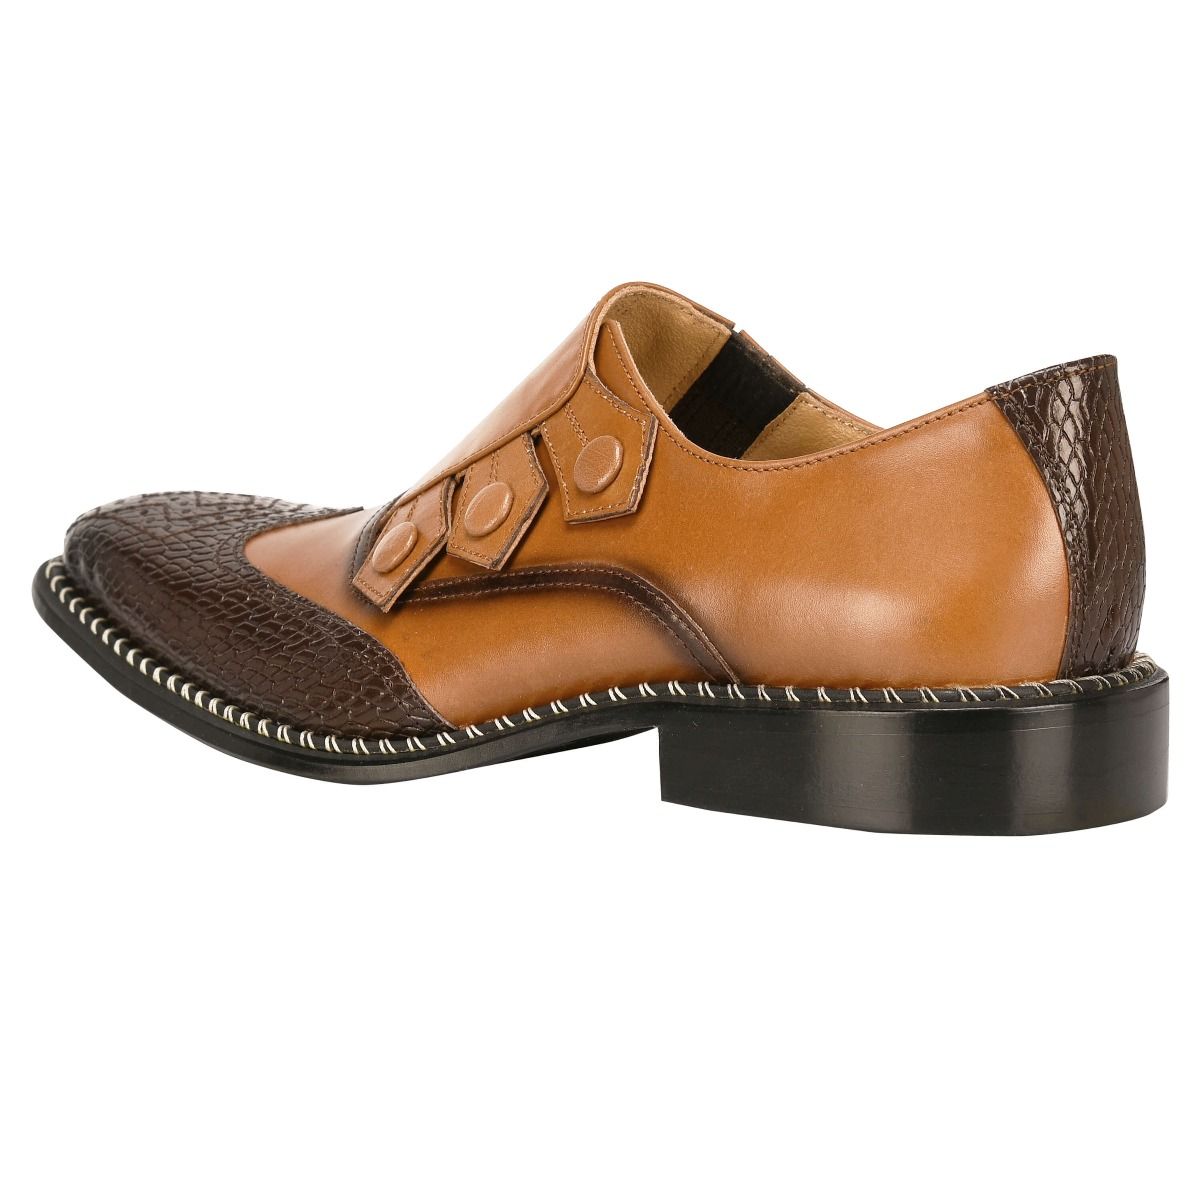 LIBERTYZENO Triple Monk Strap Slip-on Mens Leather Formal Wingtip Brogue Dress Shoes - image 3 of 5